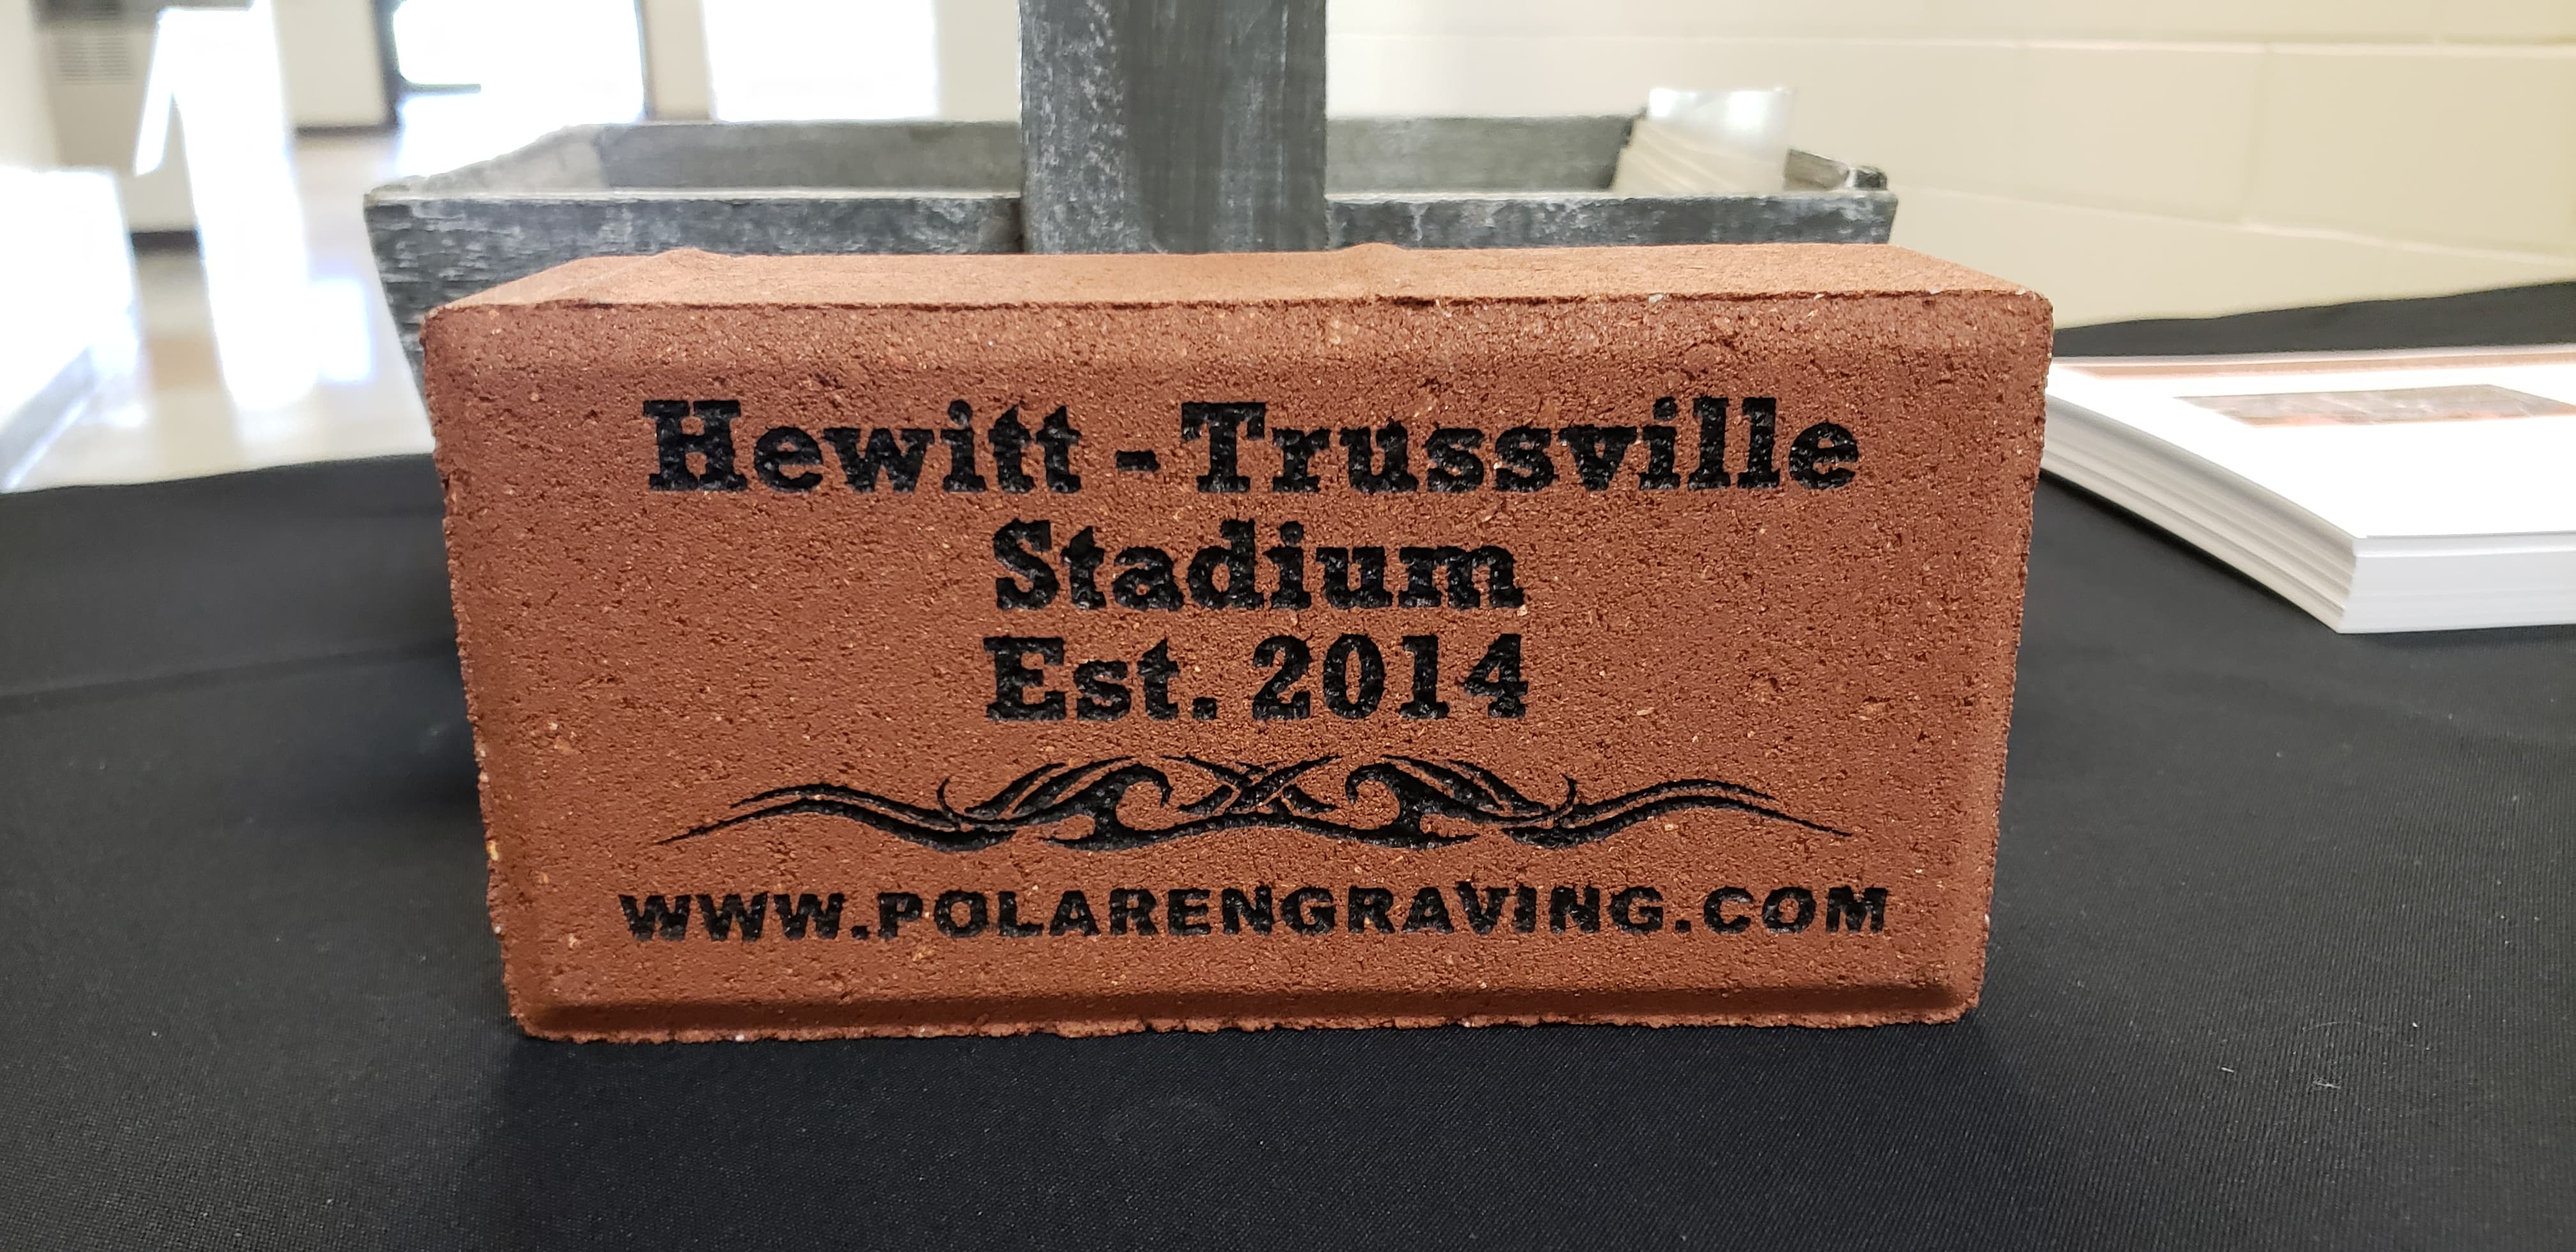 Trussville City Schools Foundation offering personalized bricks for stadium